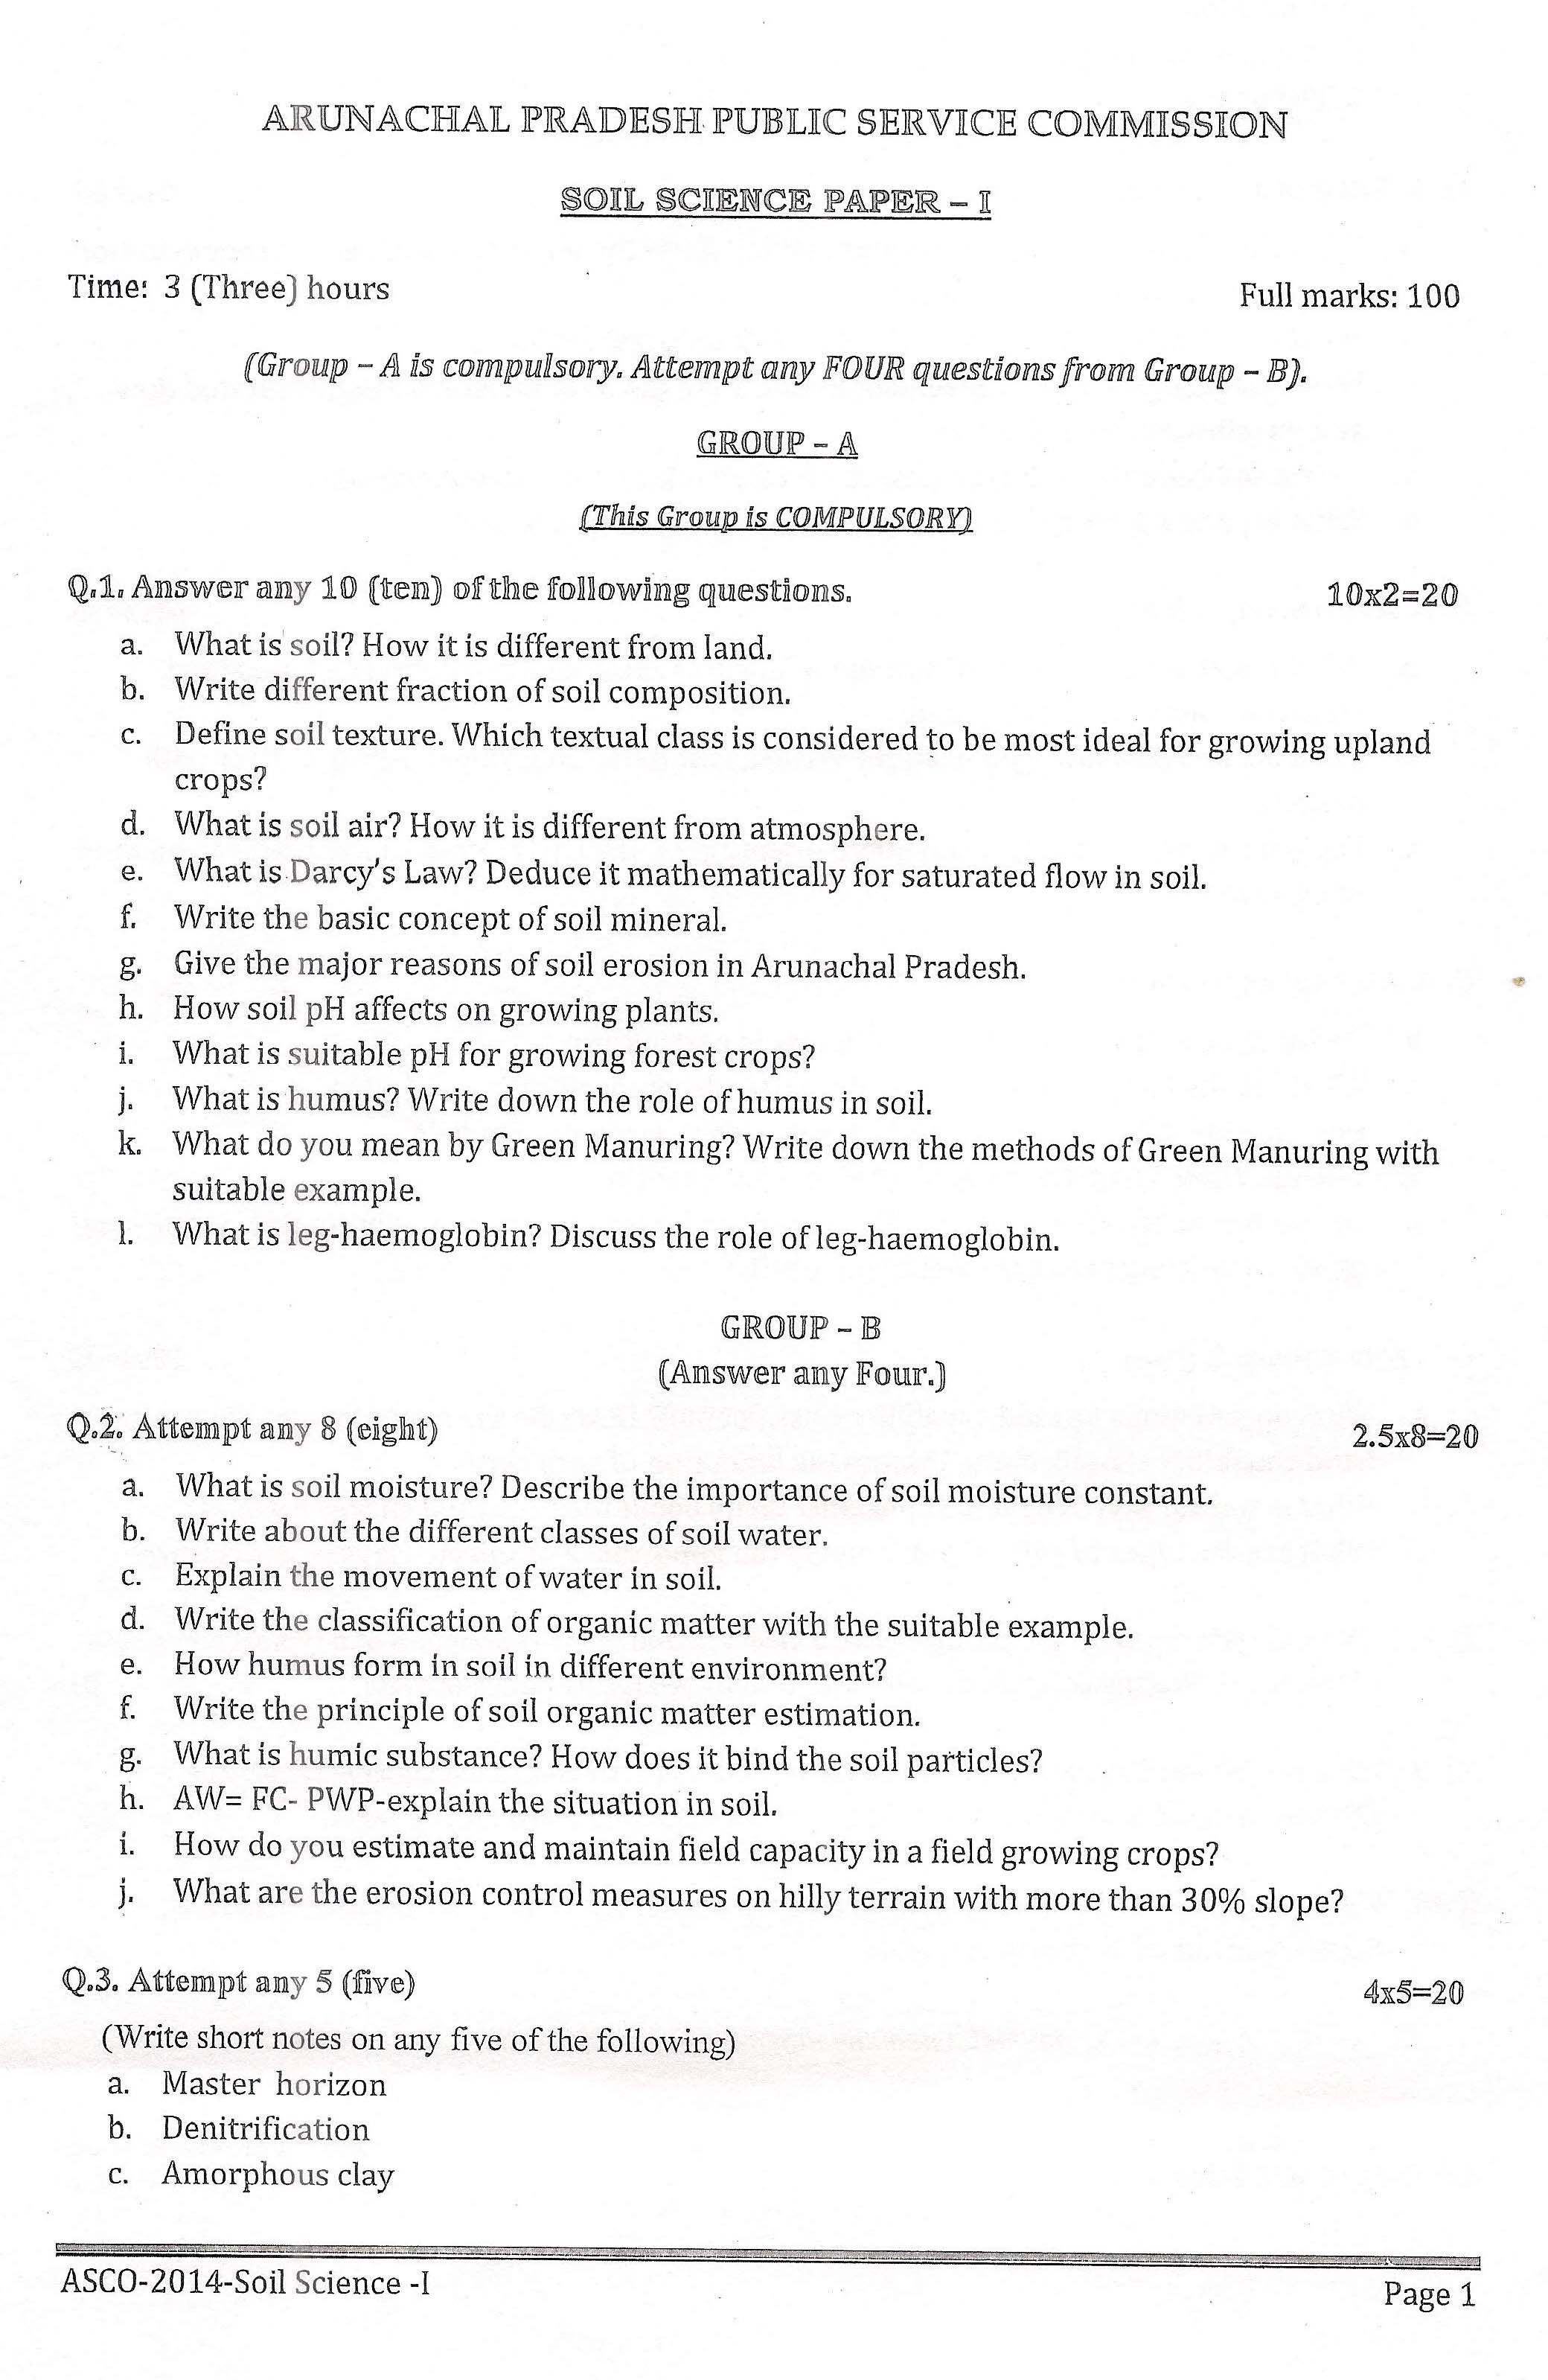 APPSC ASCO Soil Science Paper I Exam Question Paper 2014 1